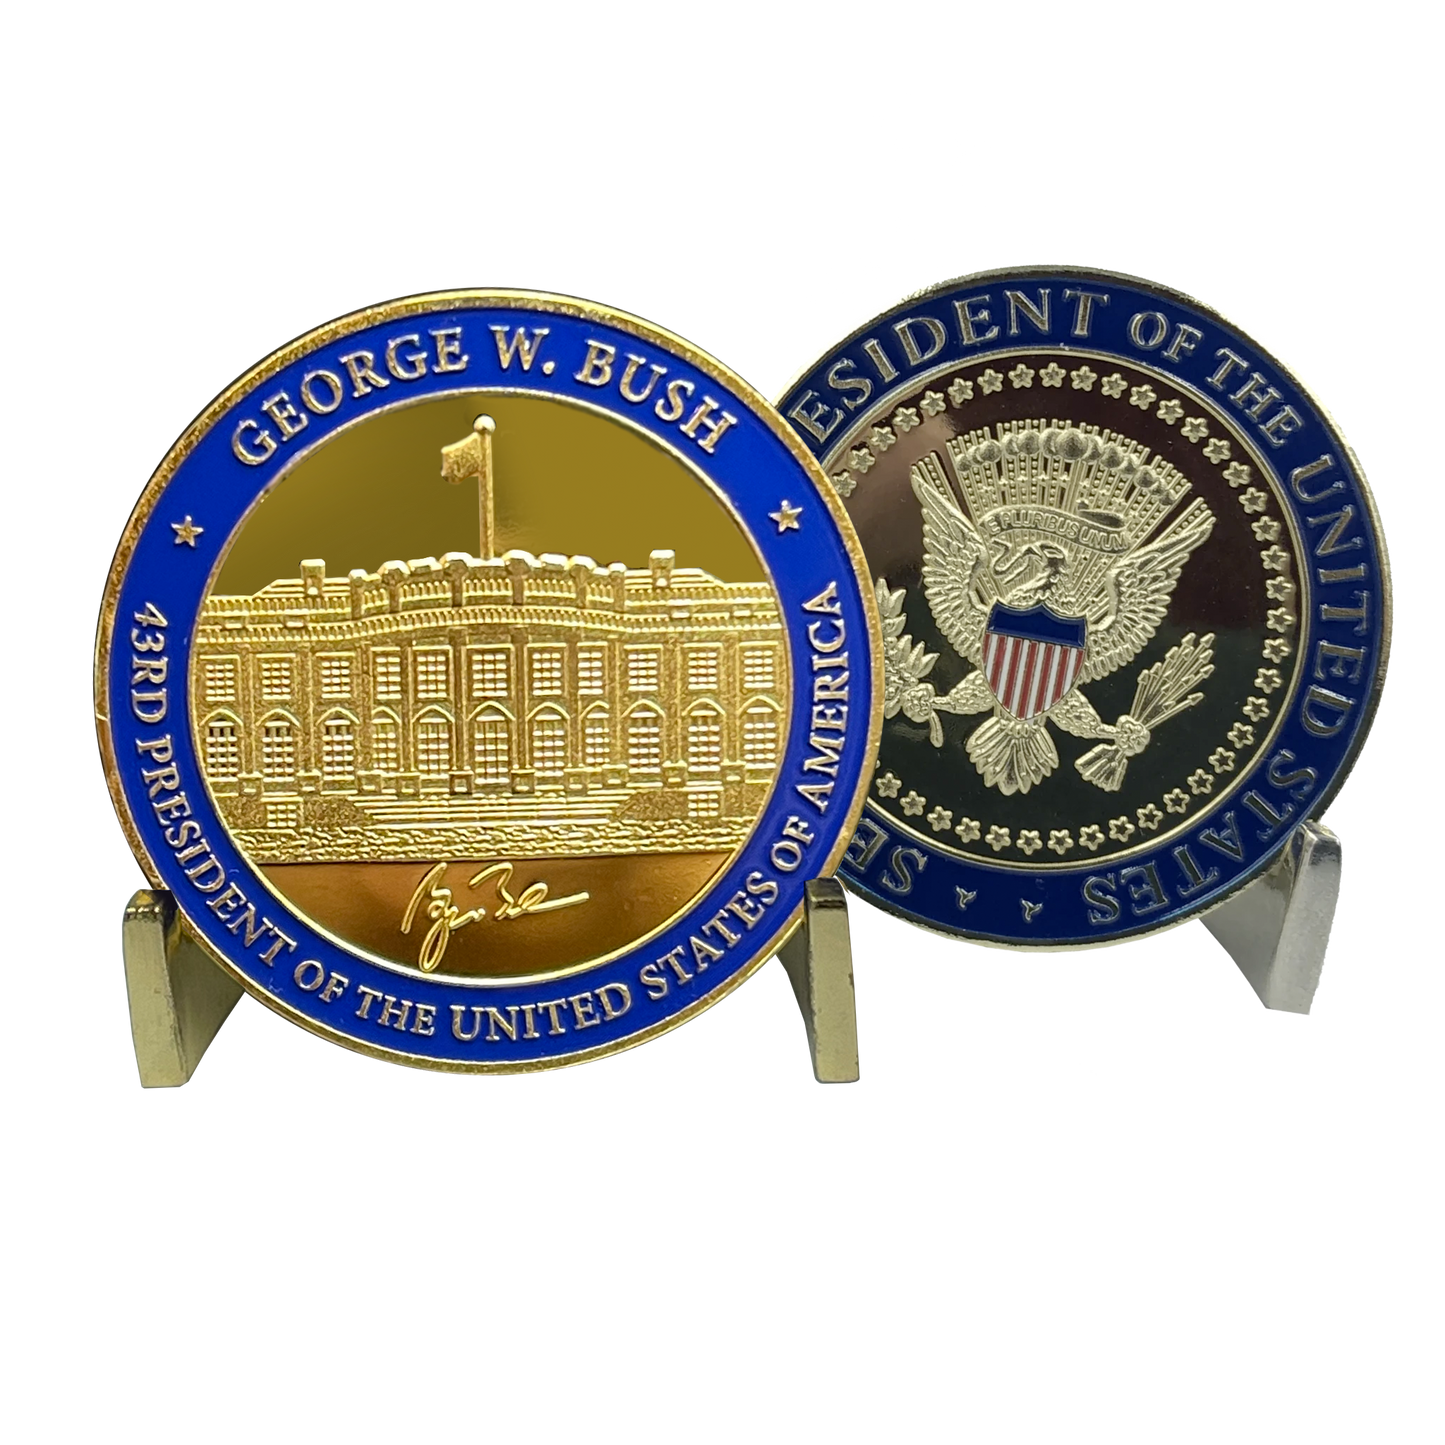 EL8-01 43rd President George W. Bush Challenge Coin White House POTUS G.W. Bush coin